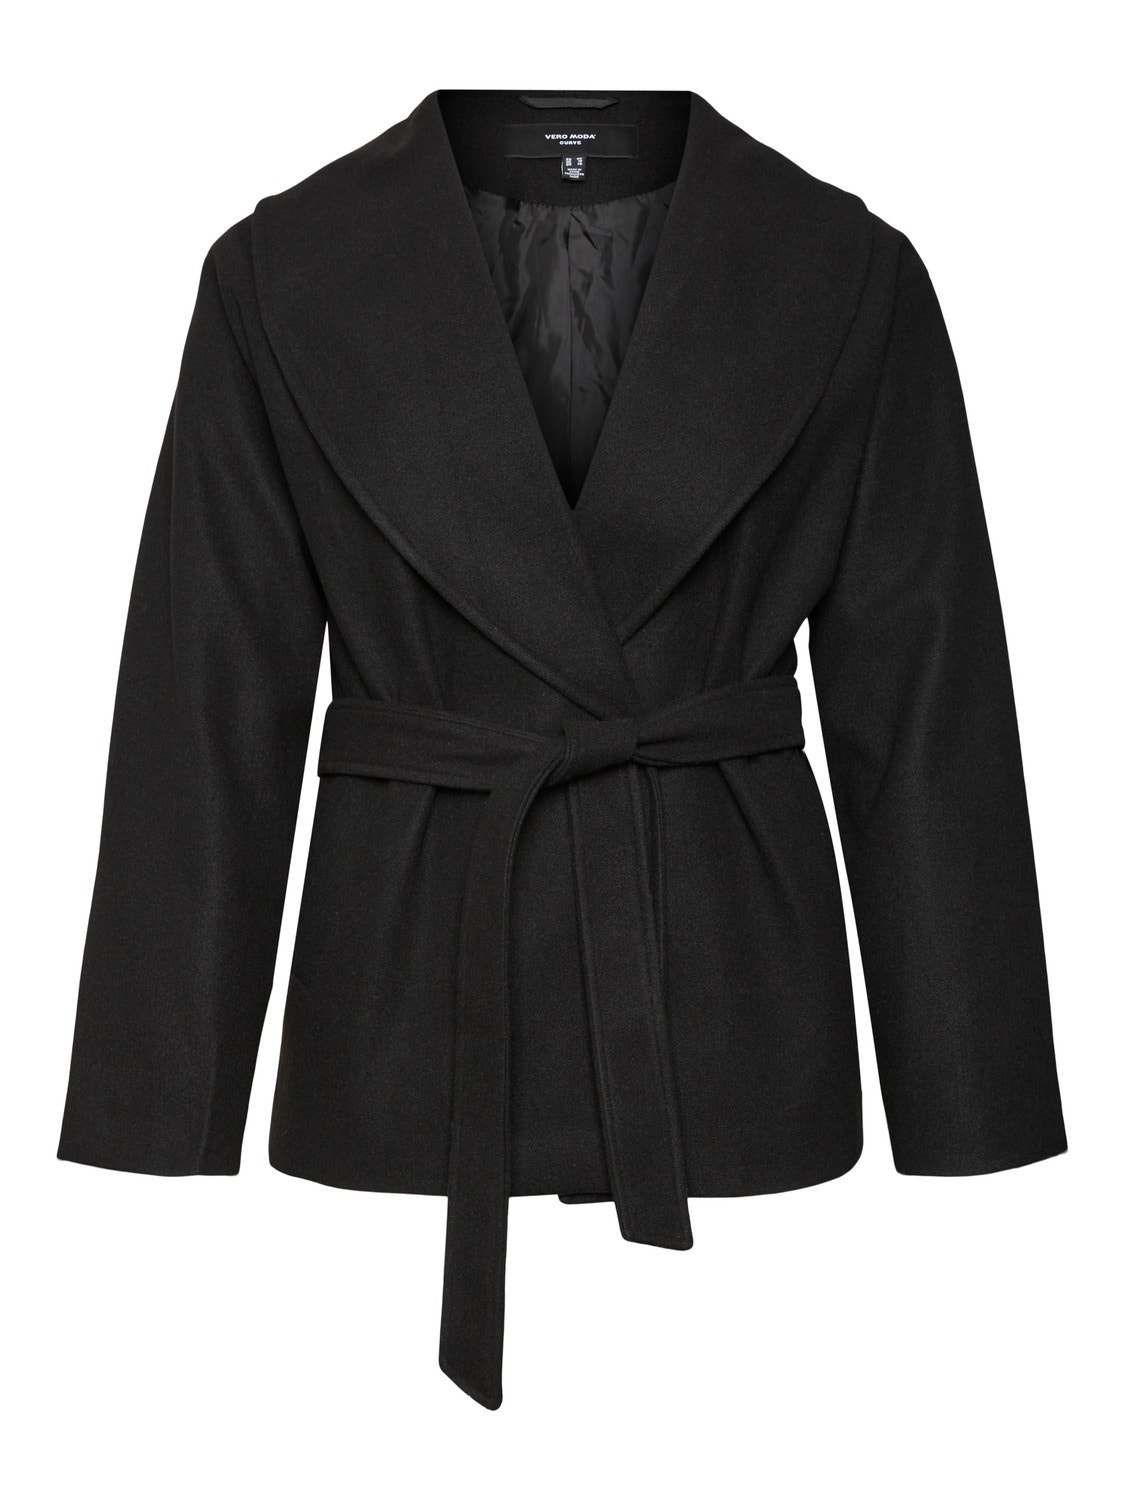 Vero Moda VMANNE Jacket -Black - 10304768